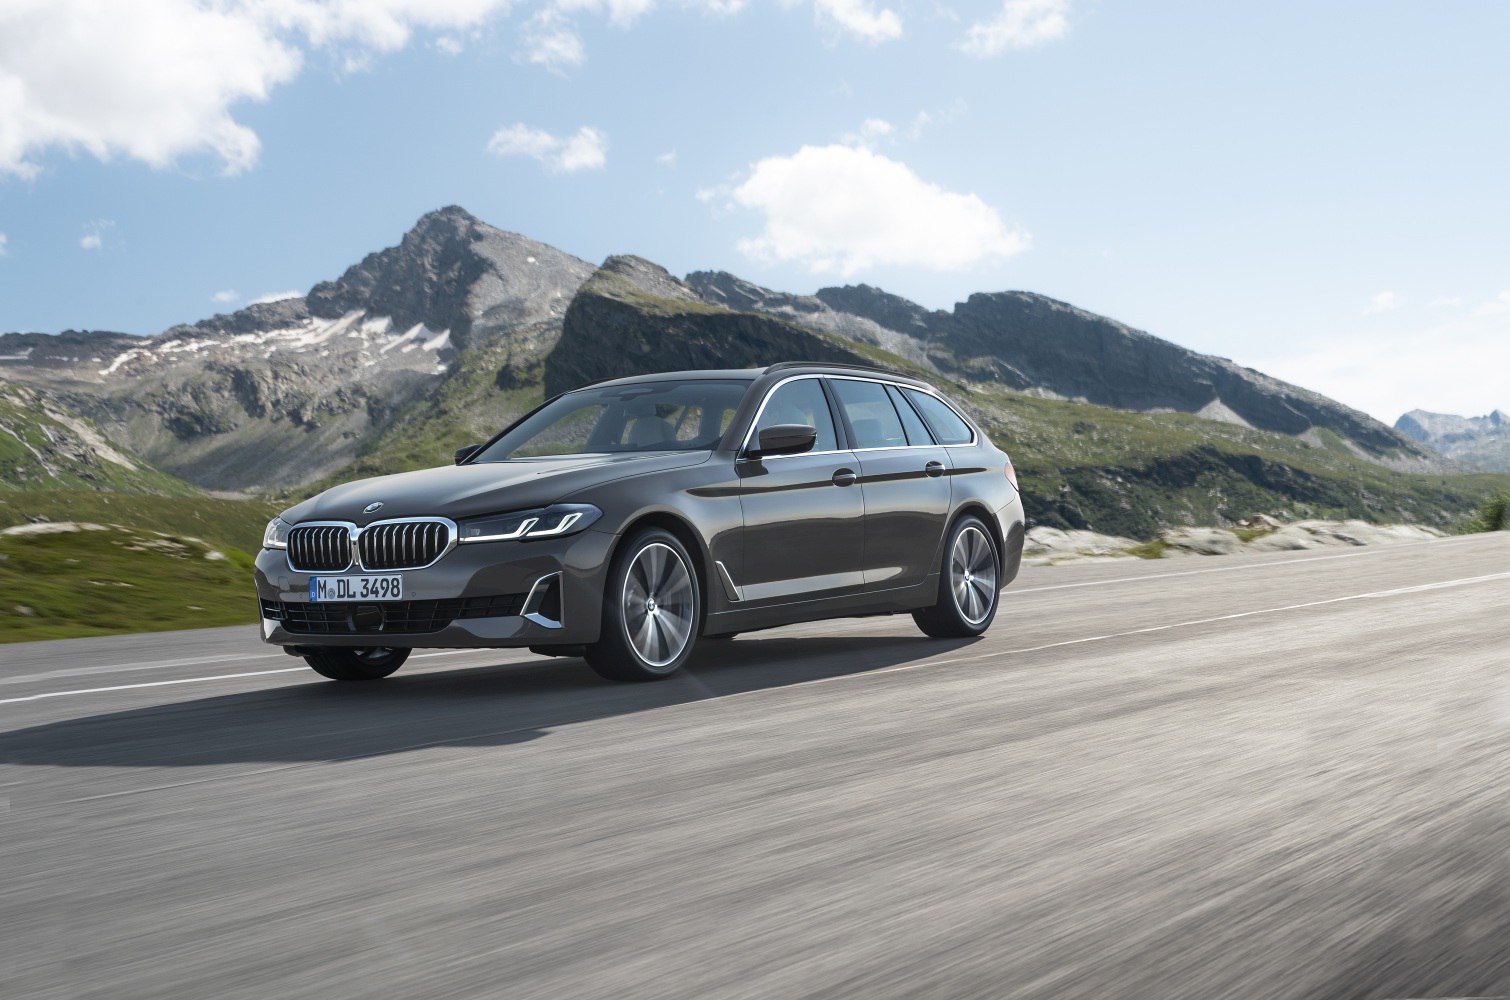 https://www.auto-data.net/images/f54/BMW-5-Series-Touring-G31-LCI-facelift-2020.jpg